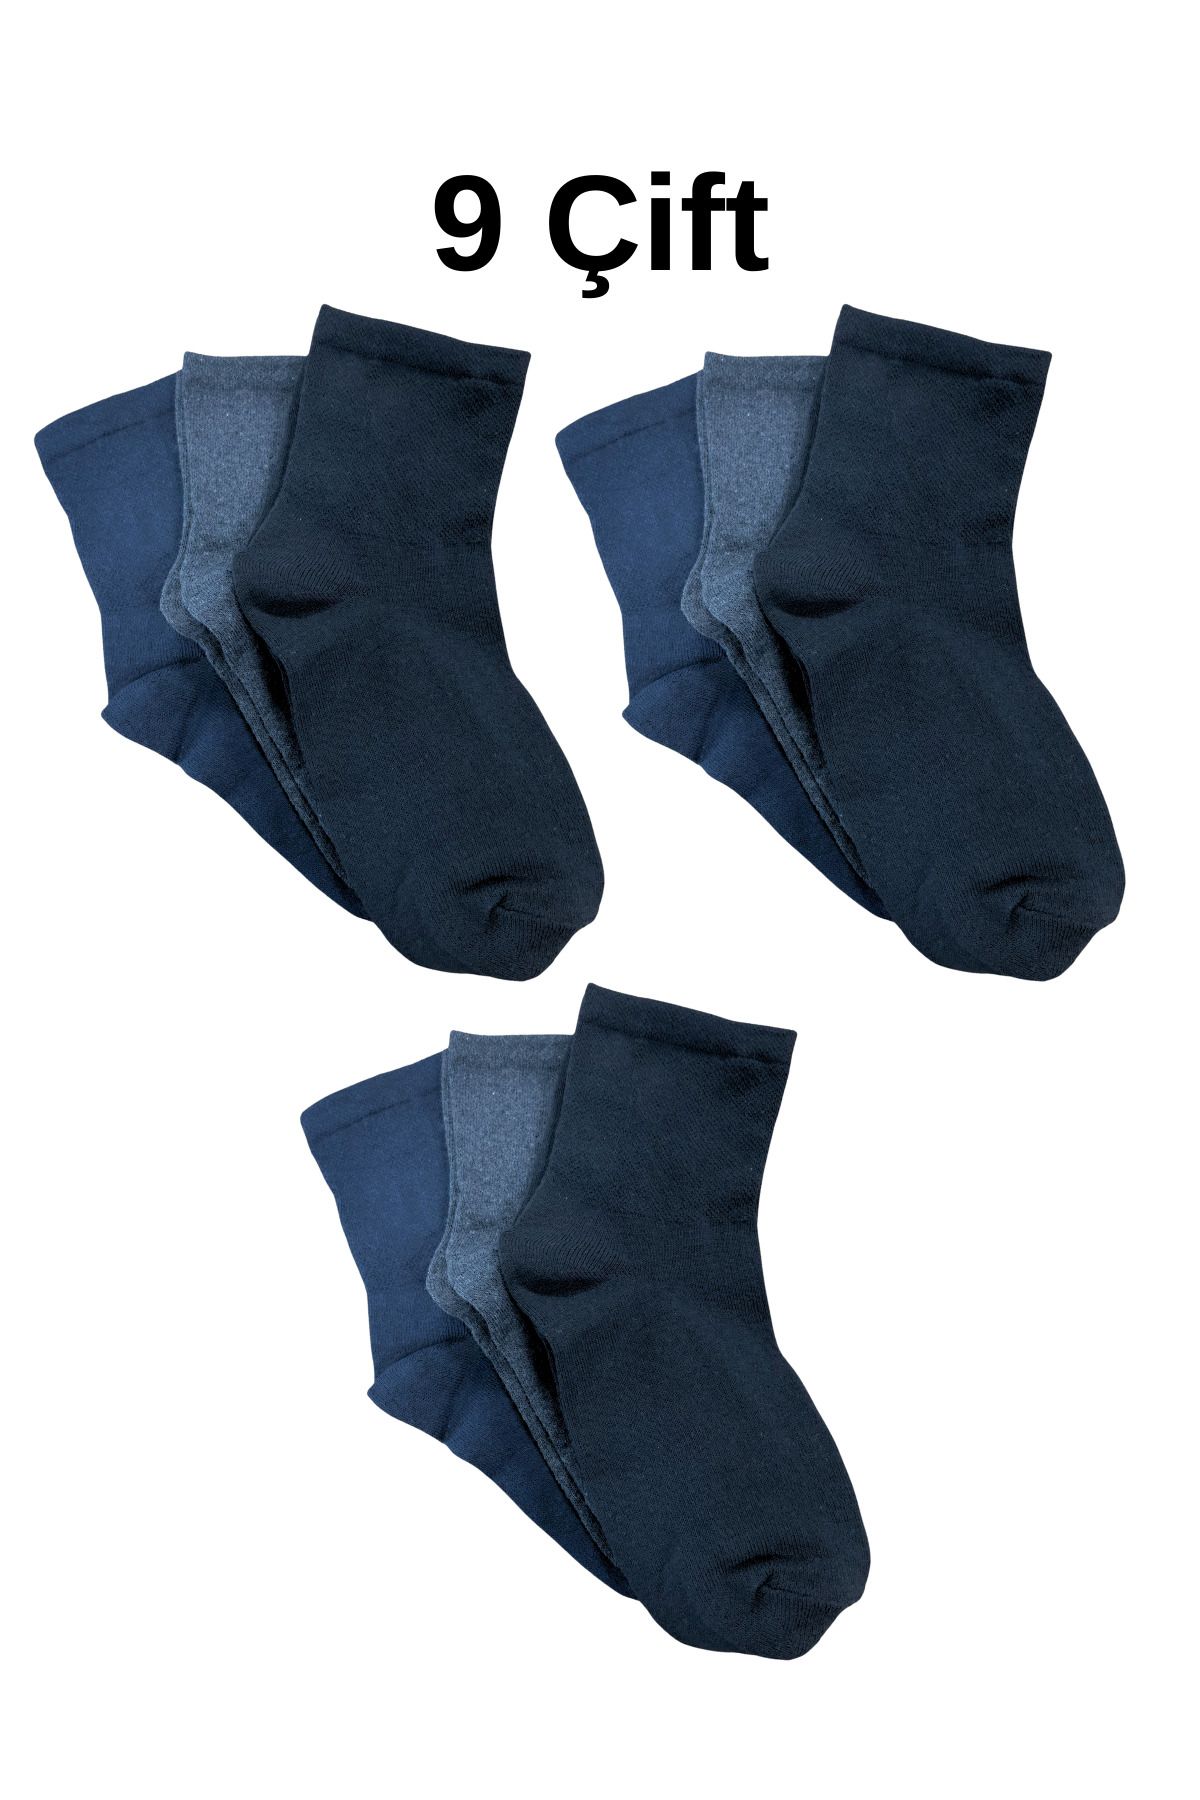 socksbox 9 Çift Orta Konç Çorap/36-43/Siyah-Lacivert-Gri